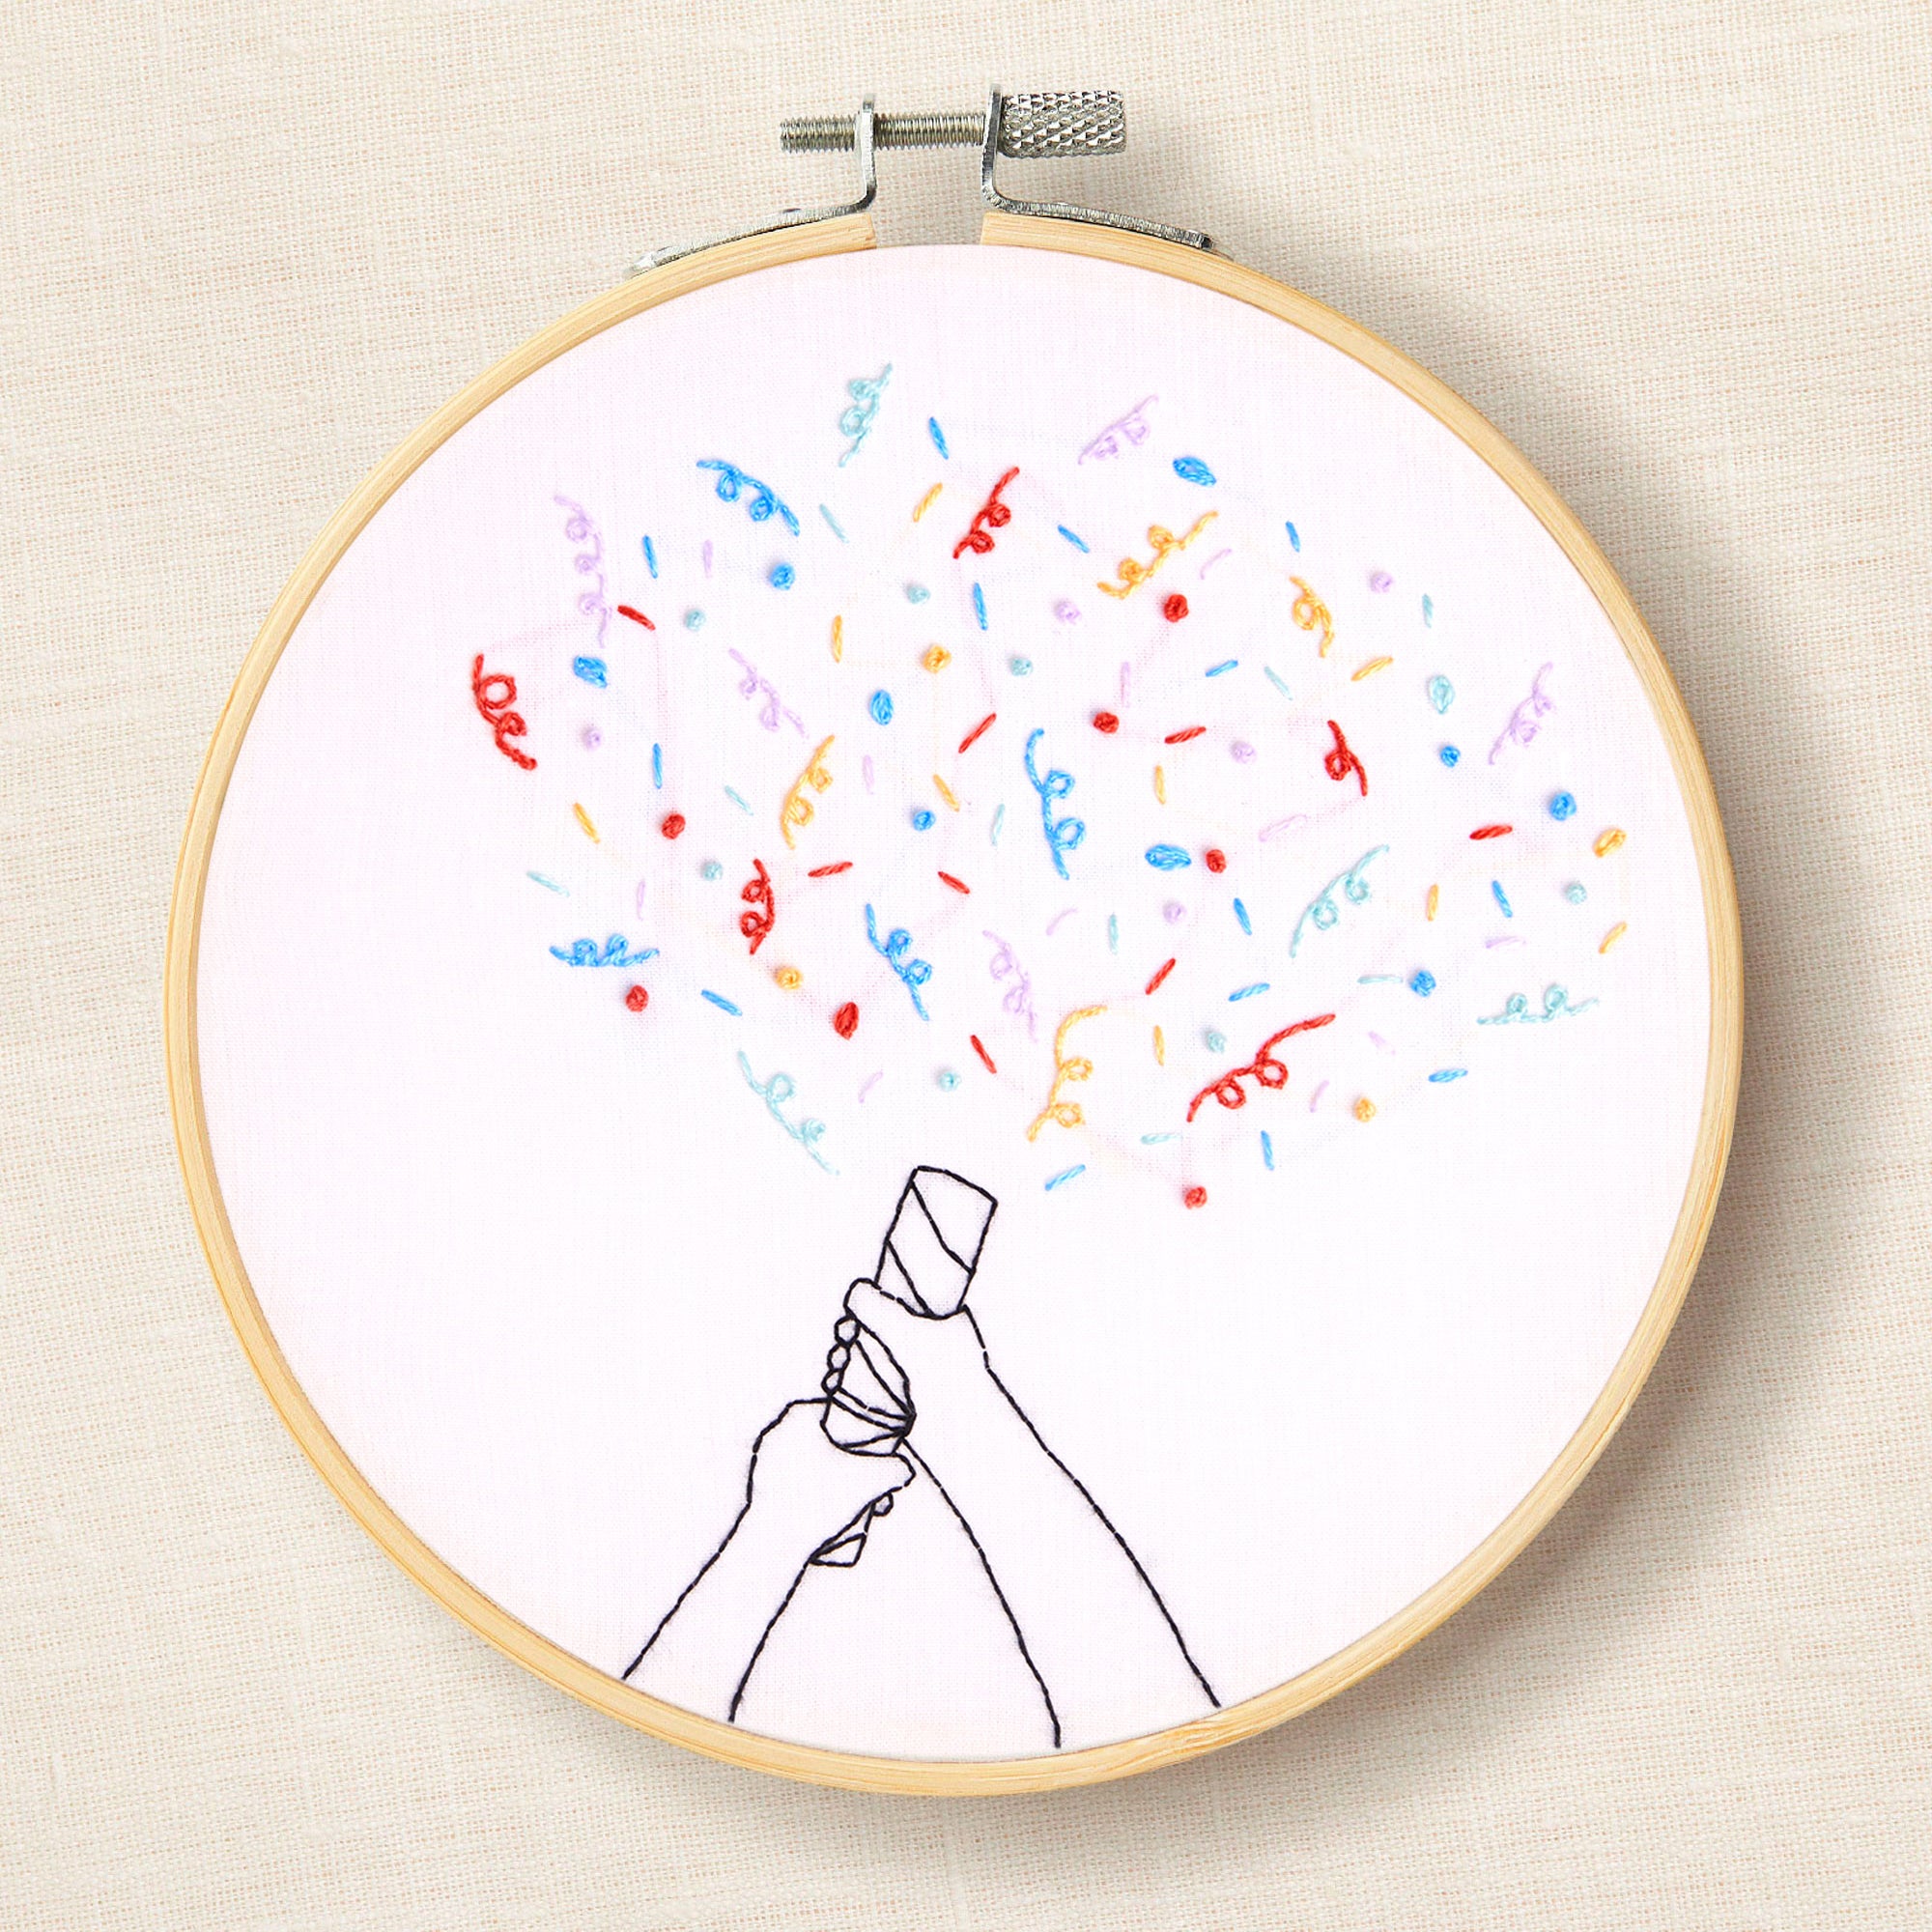 DMC Confetti Celebration by Kseniia Guseva (Embroidery Kit)